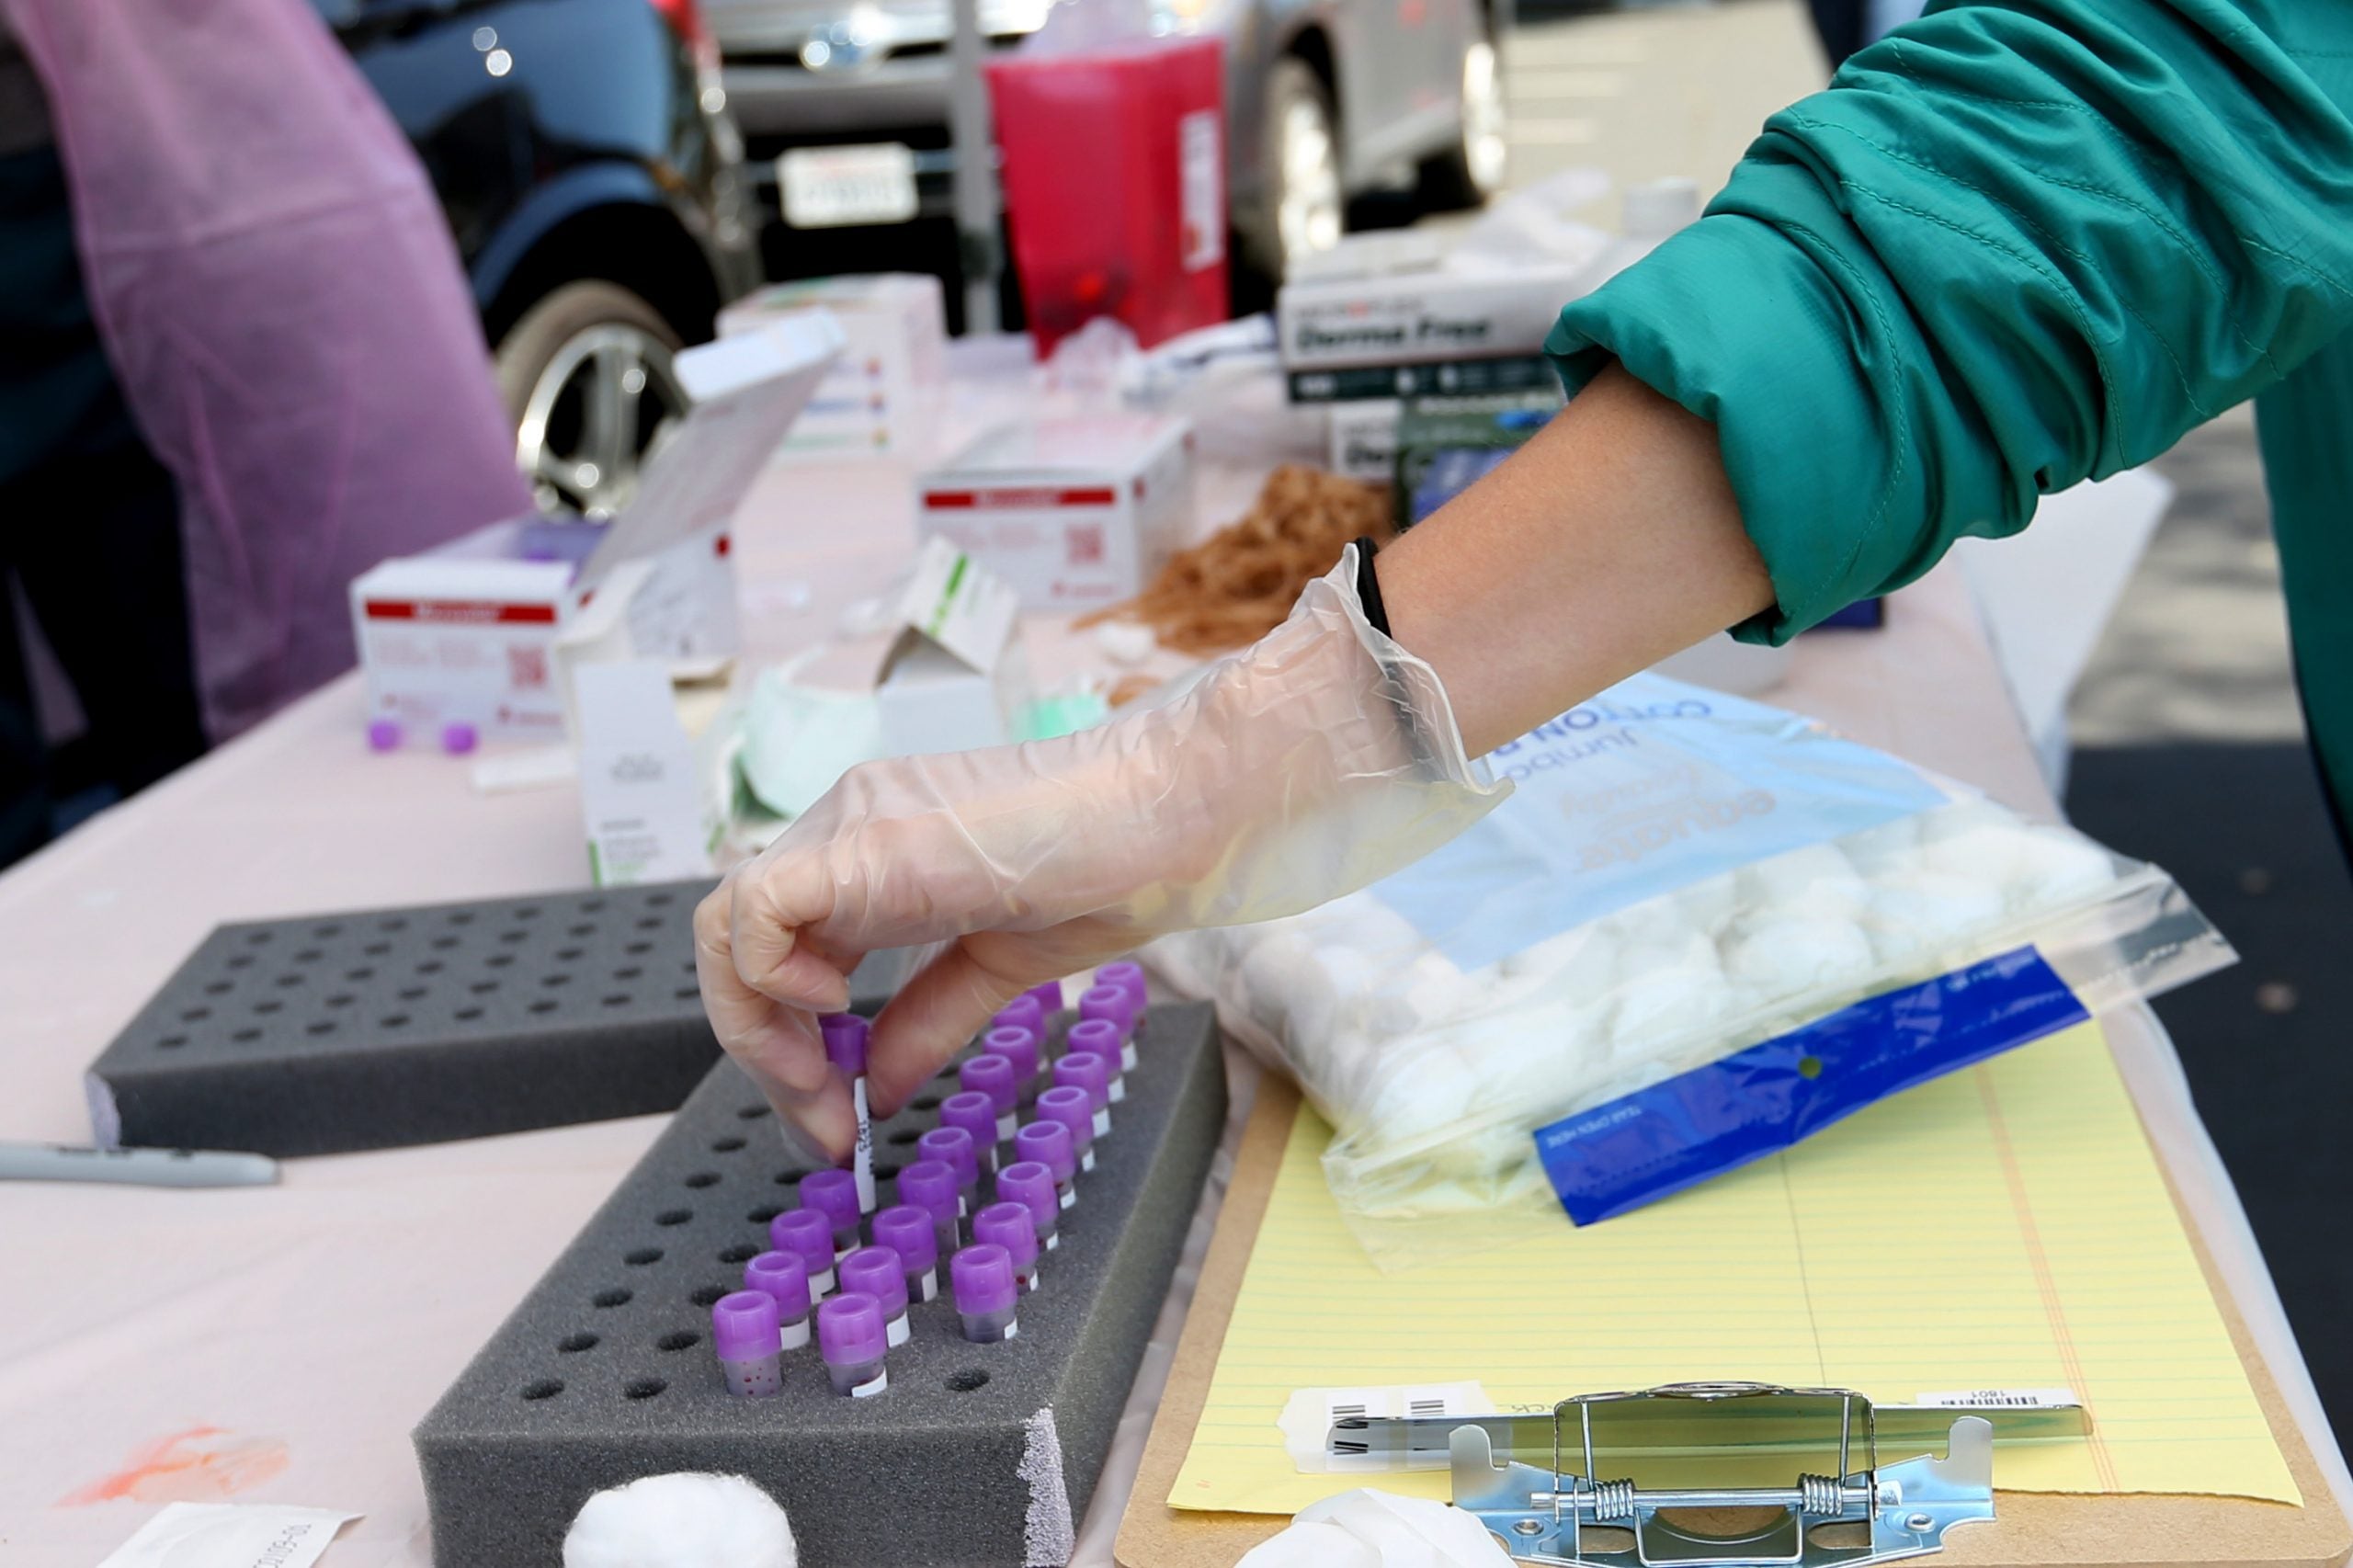 California Had 2 Coronavirus Deaths Before 1st Reported US Death